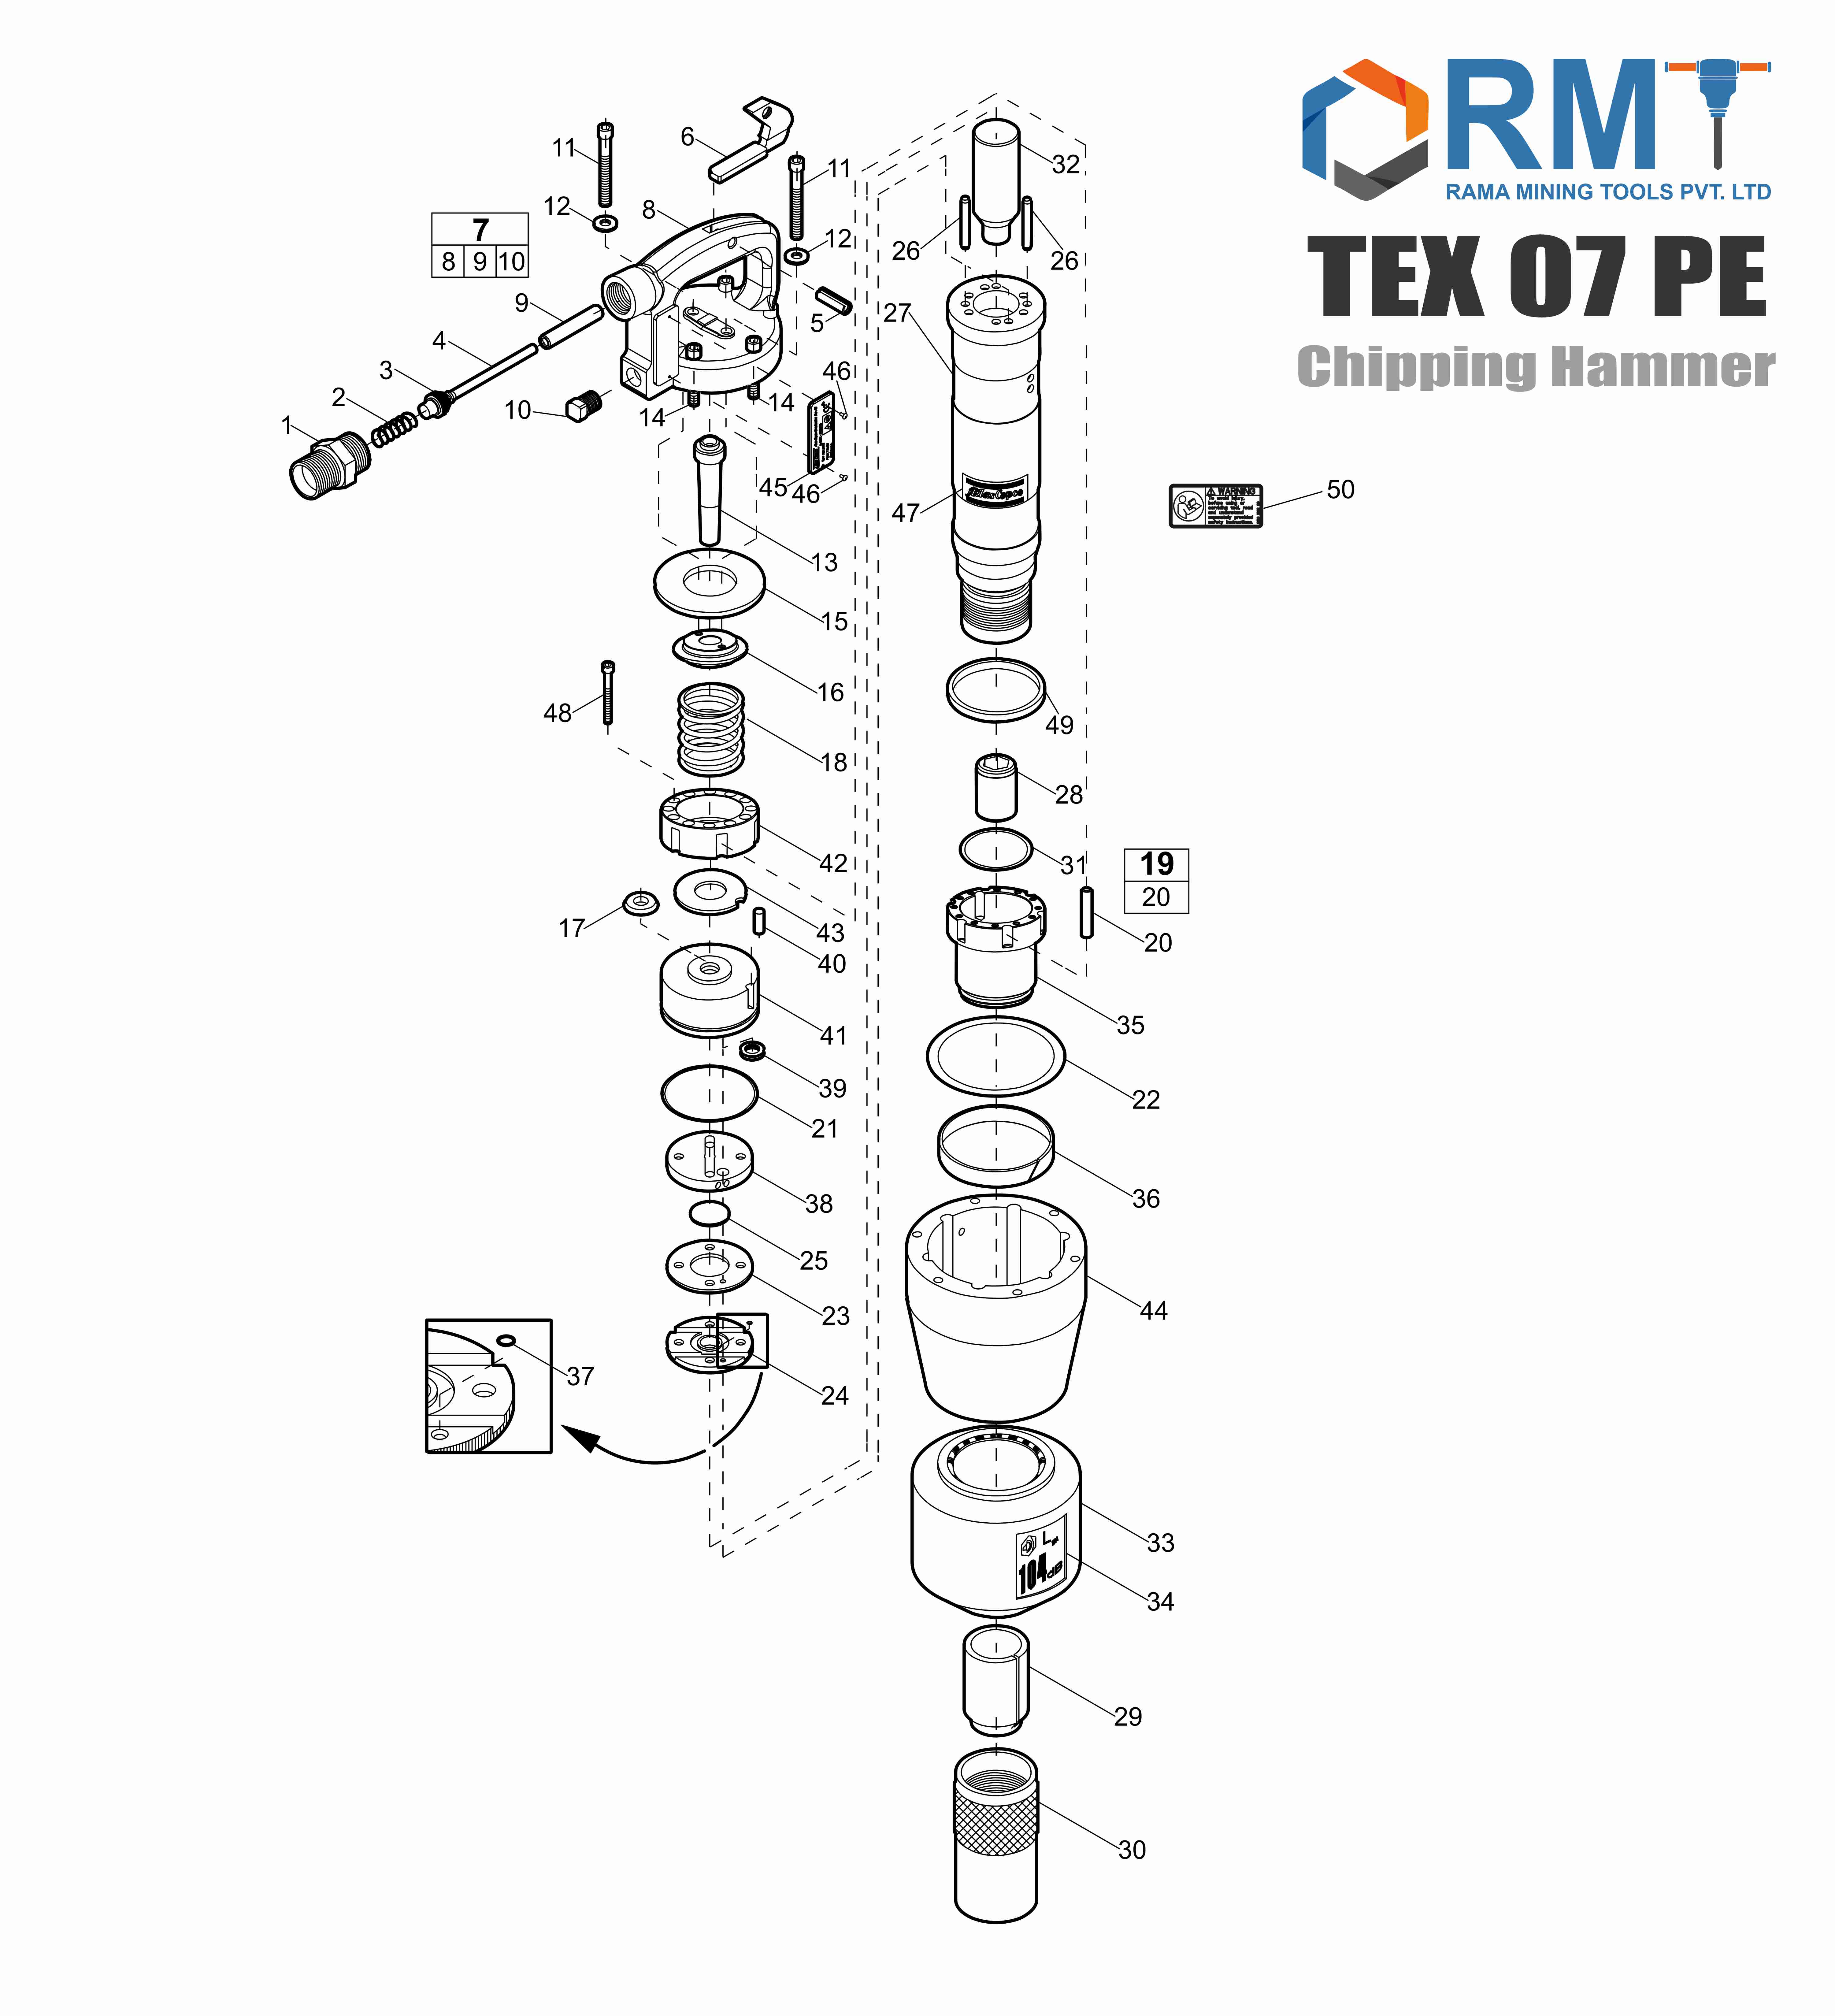 TEX 07 PE - Chipping Hammer